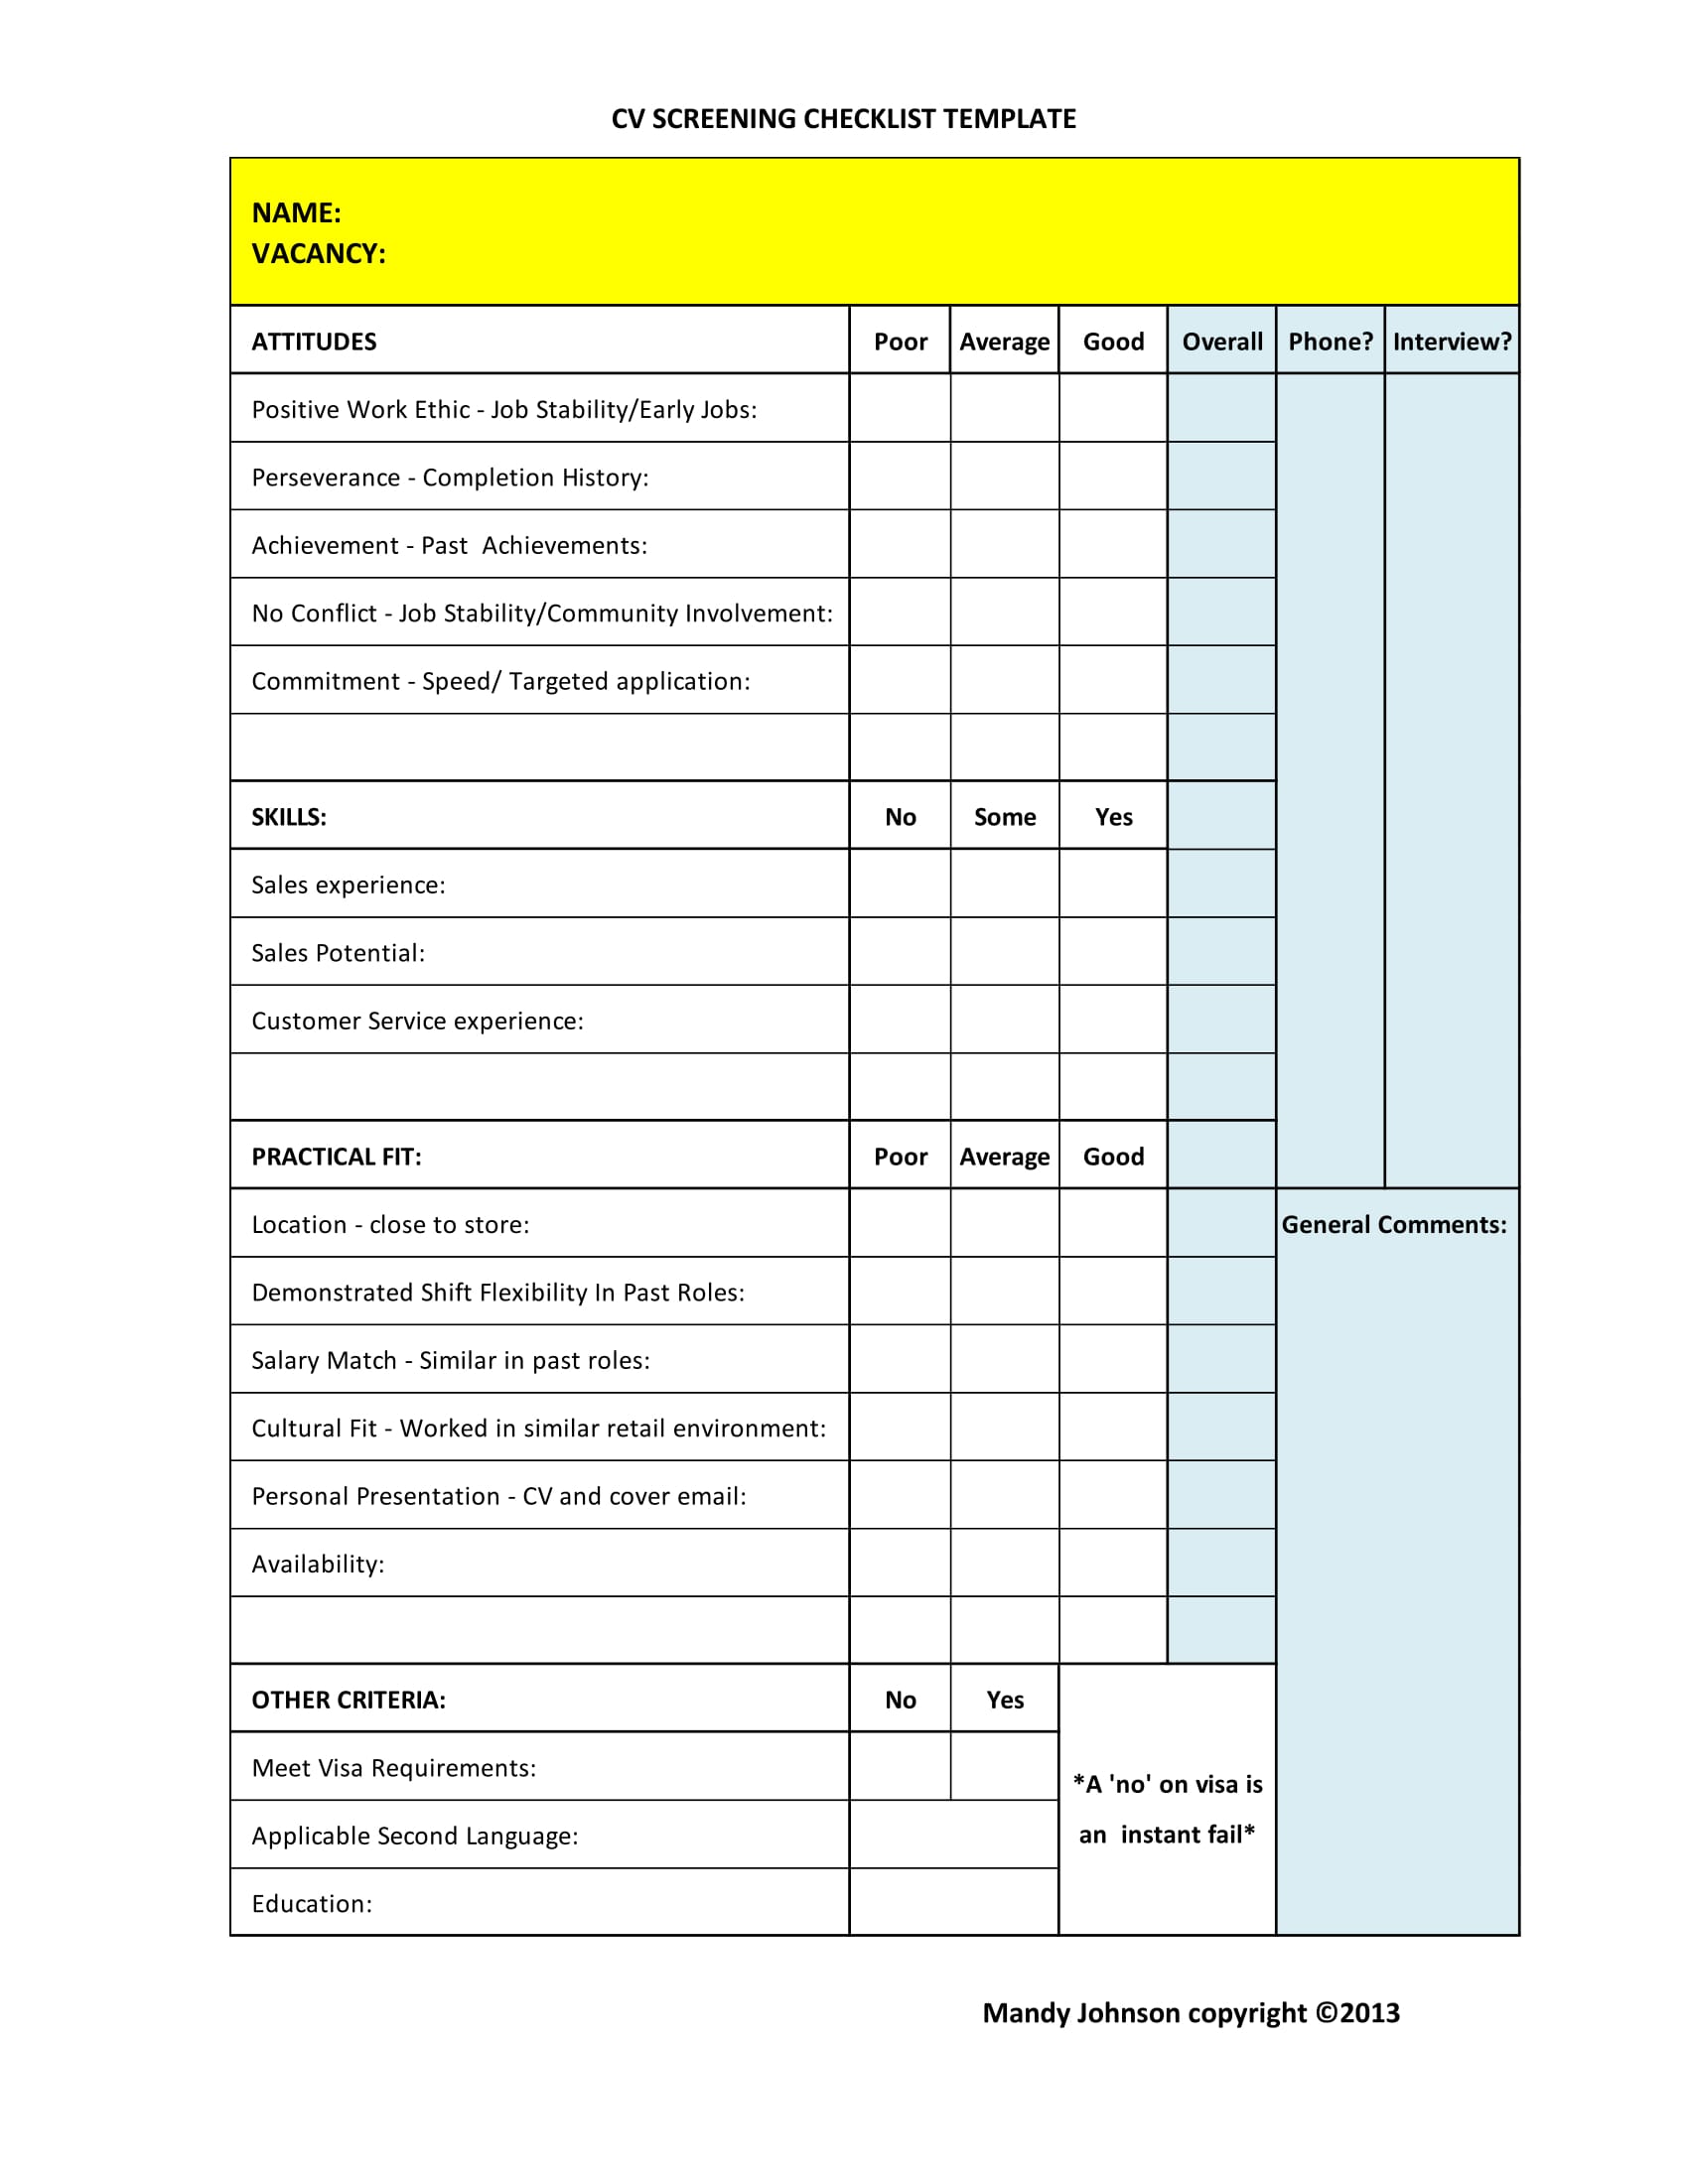 resume screening evaluation template 1